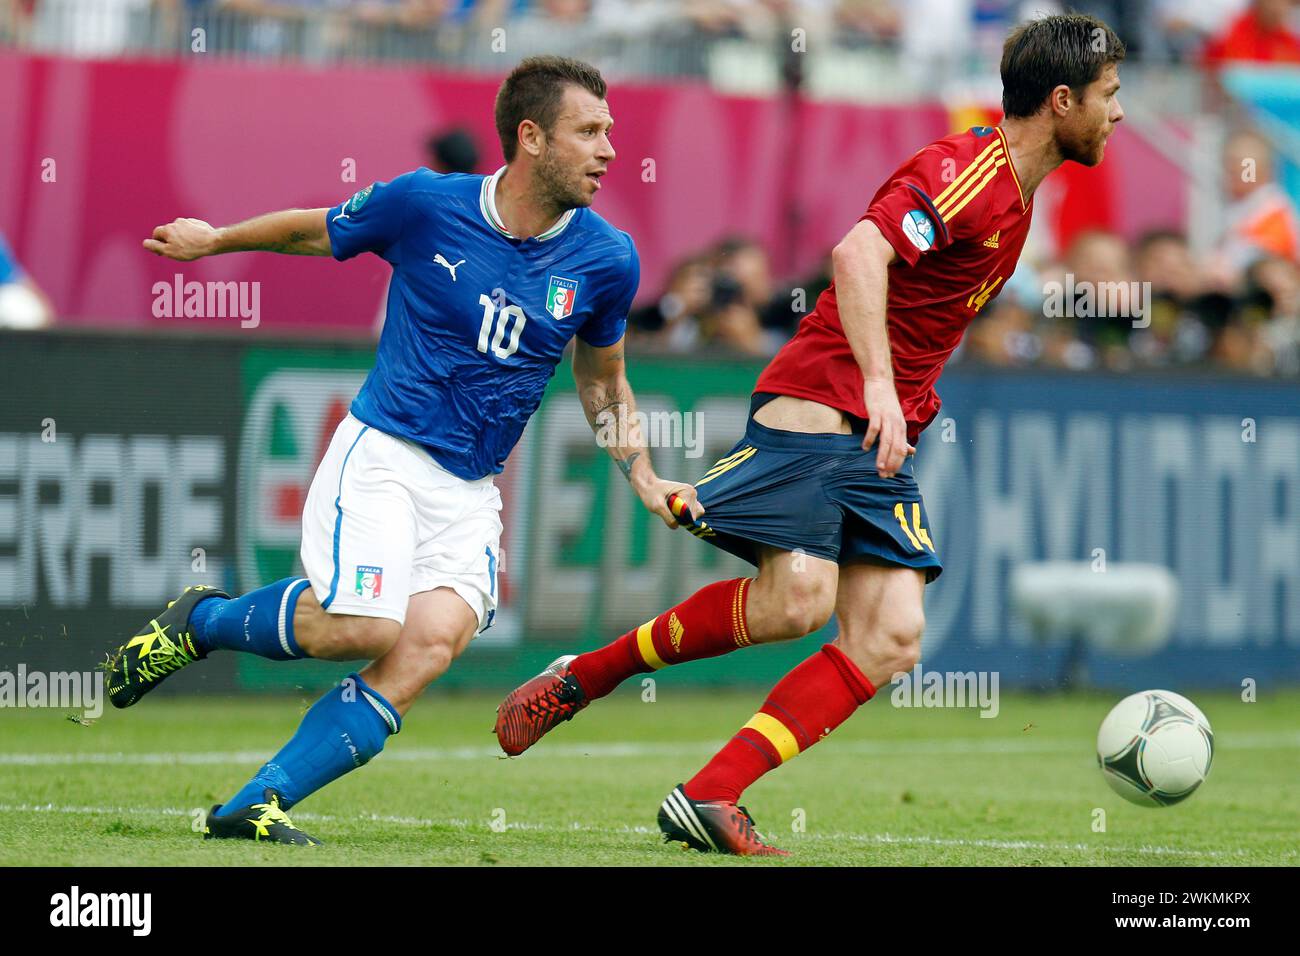 Antonio Cassano gegen Xabi Alonso Fussball EM 2012 : Spanien - Italien 1:1 UEFA EURO 2012 Groupe C : Espagne vs. Italie 10.6.12 © diebilderwelt / Alamy Stock Banque D'Images